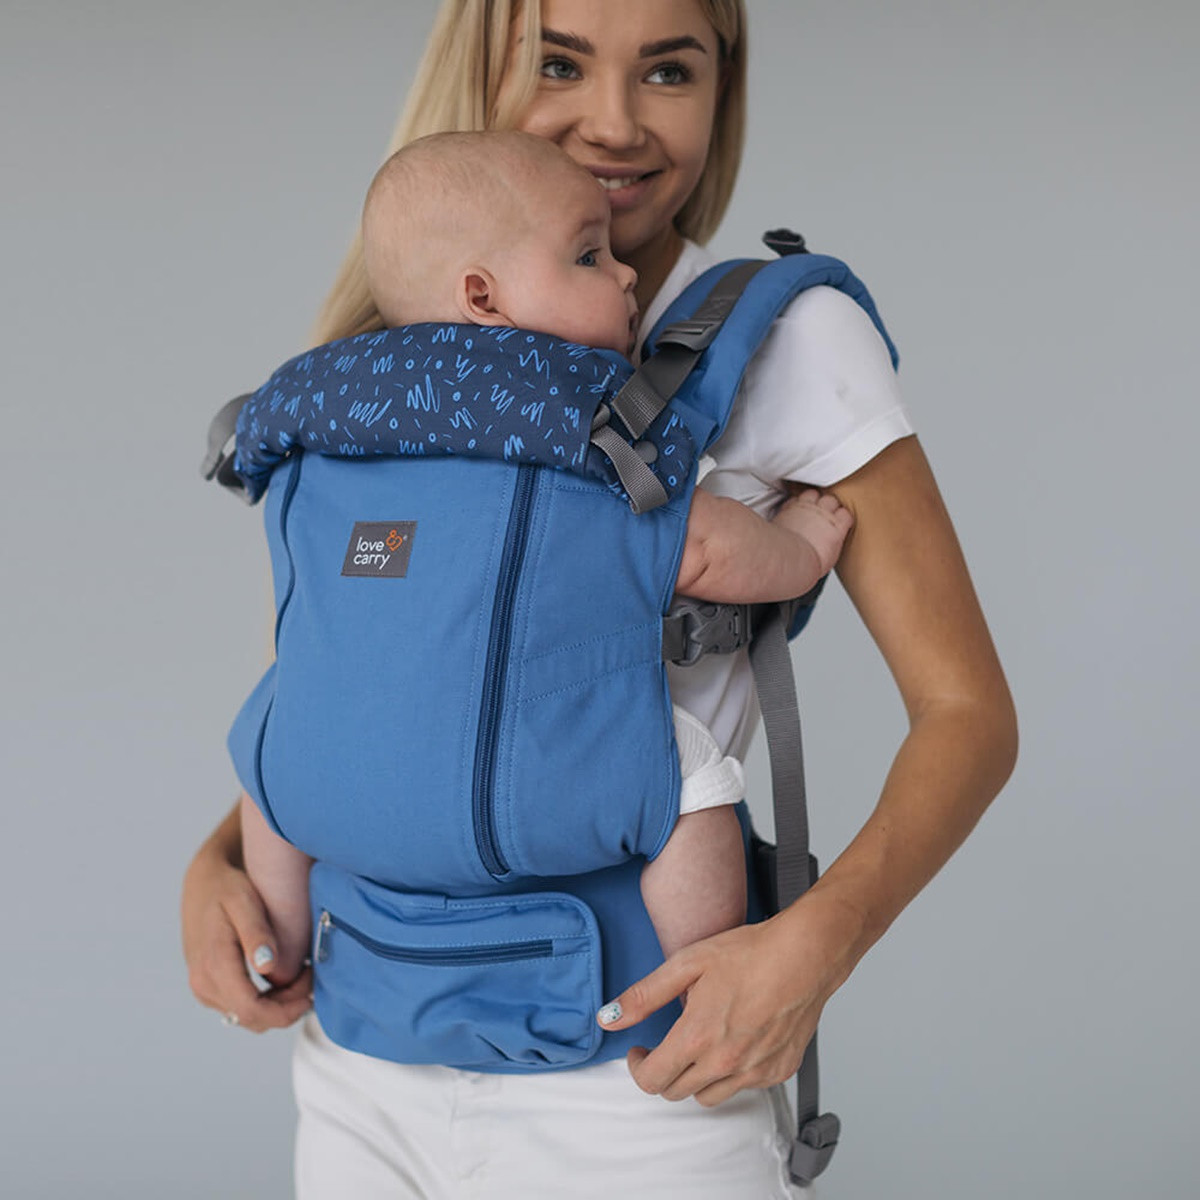 Porte-bébé physiologique AIR X Biscay Love & Carry